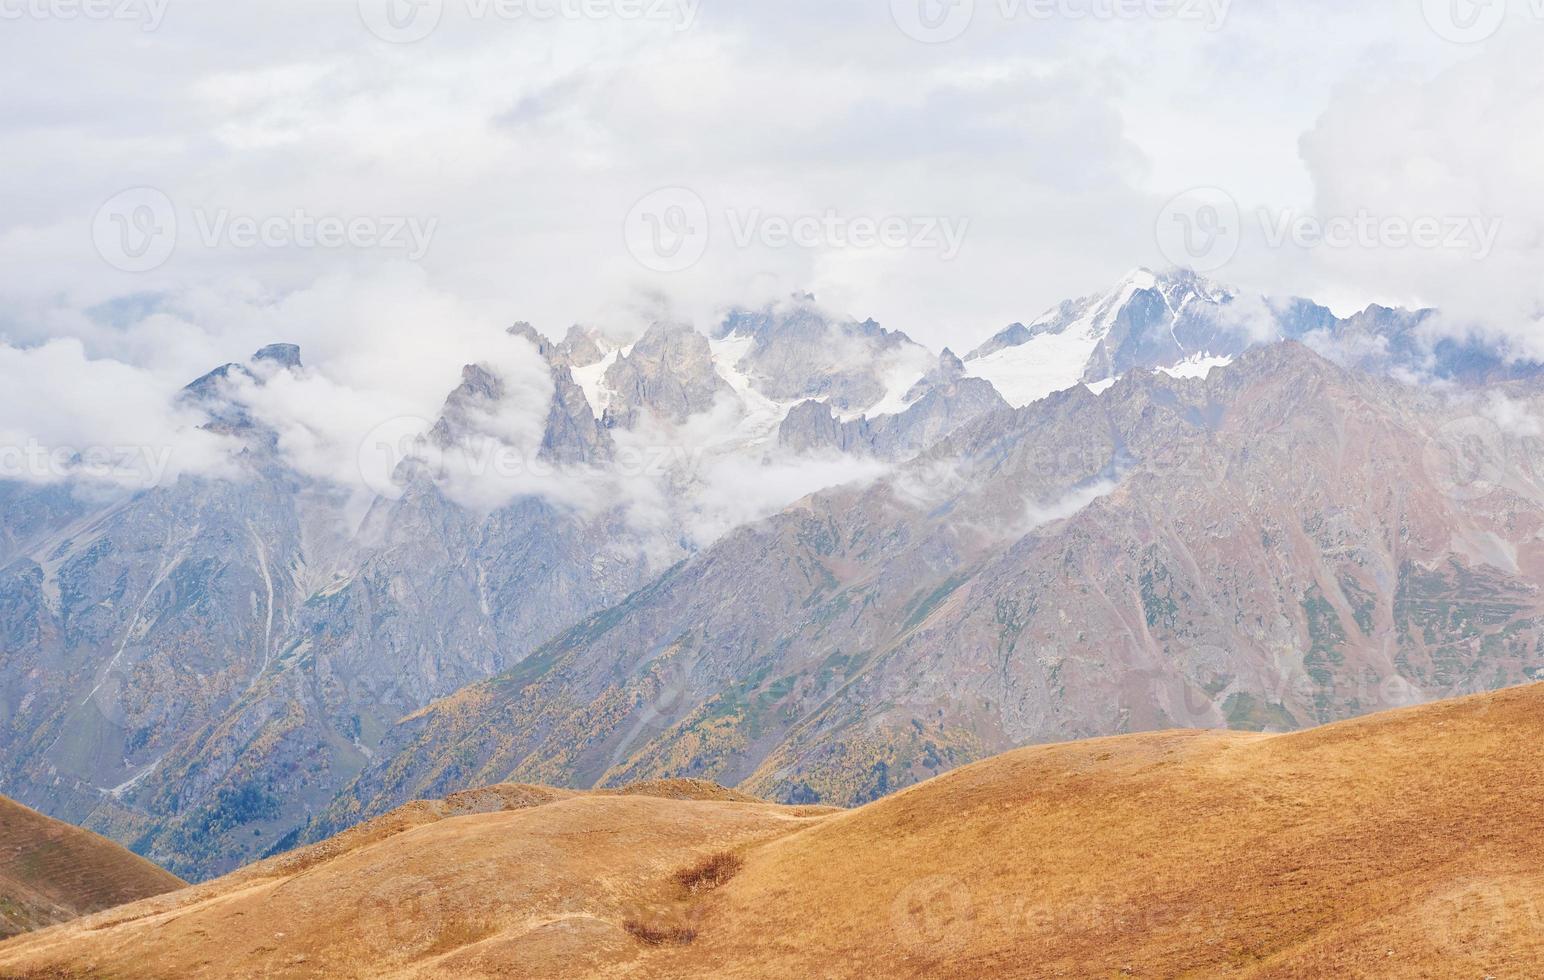 fantastiche montagne innevate nelle bellissime nubi cumuliformi. cresta caucasica principale. tipo mount ushba meyer, georgia foto